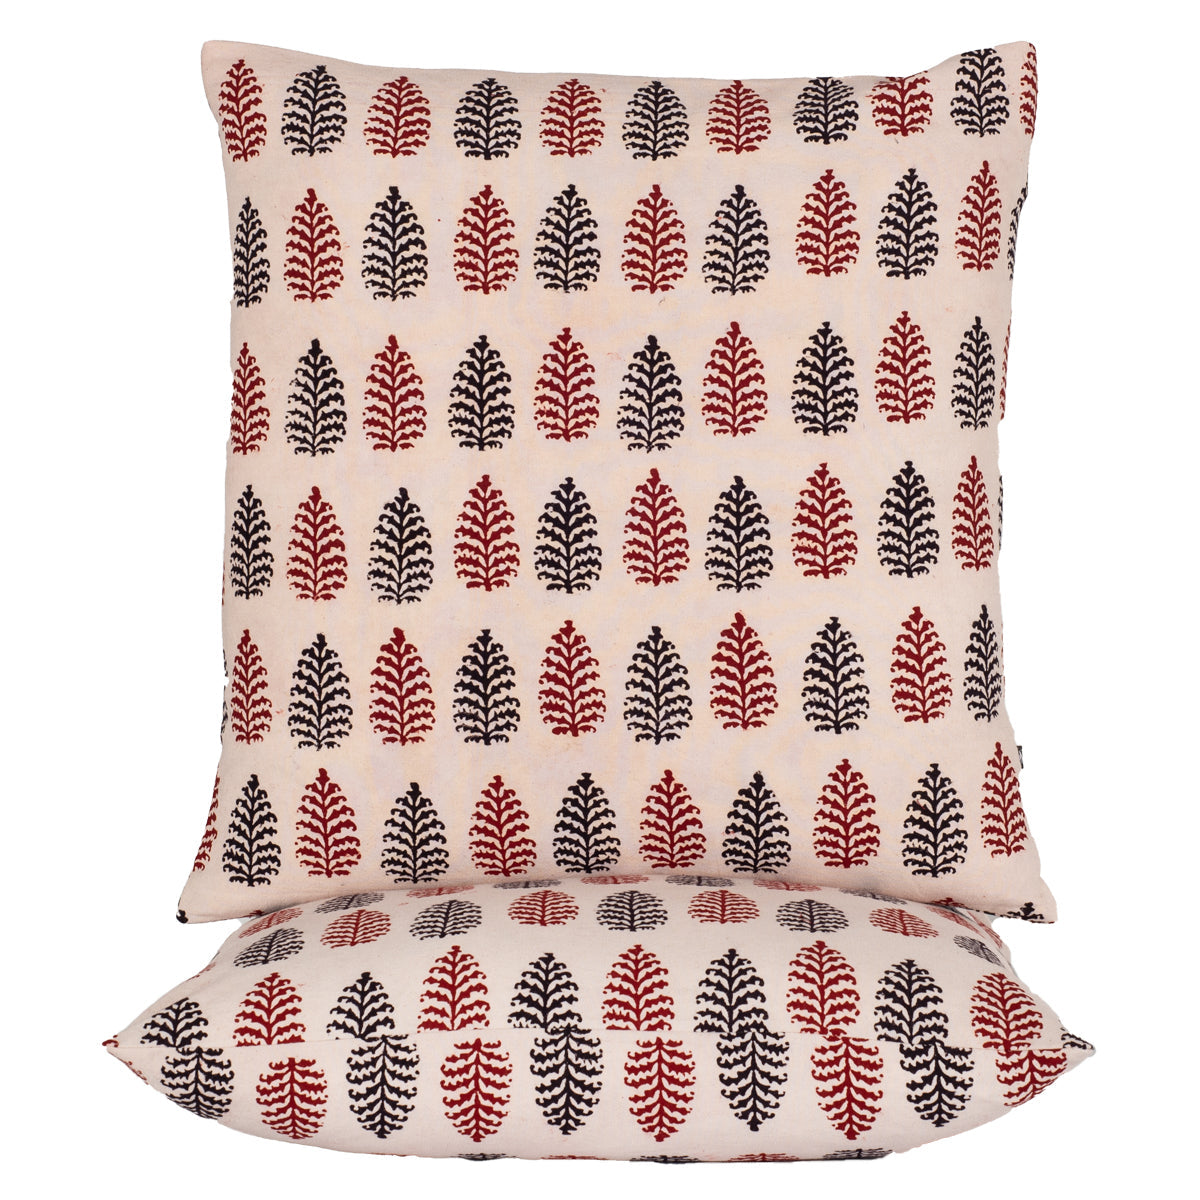 Pine Motif Bagh Hand Block Print Cotton Cushion Cover - Red Black-1